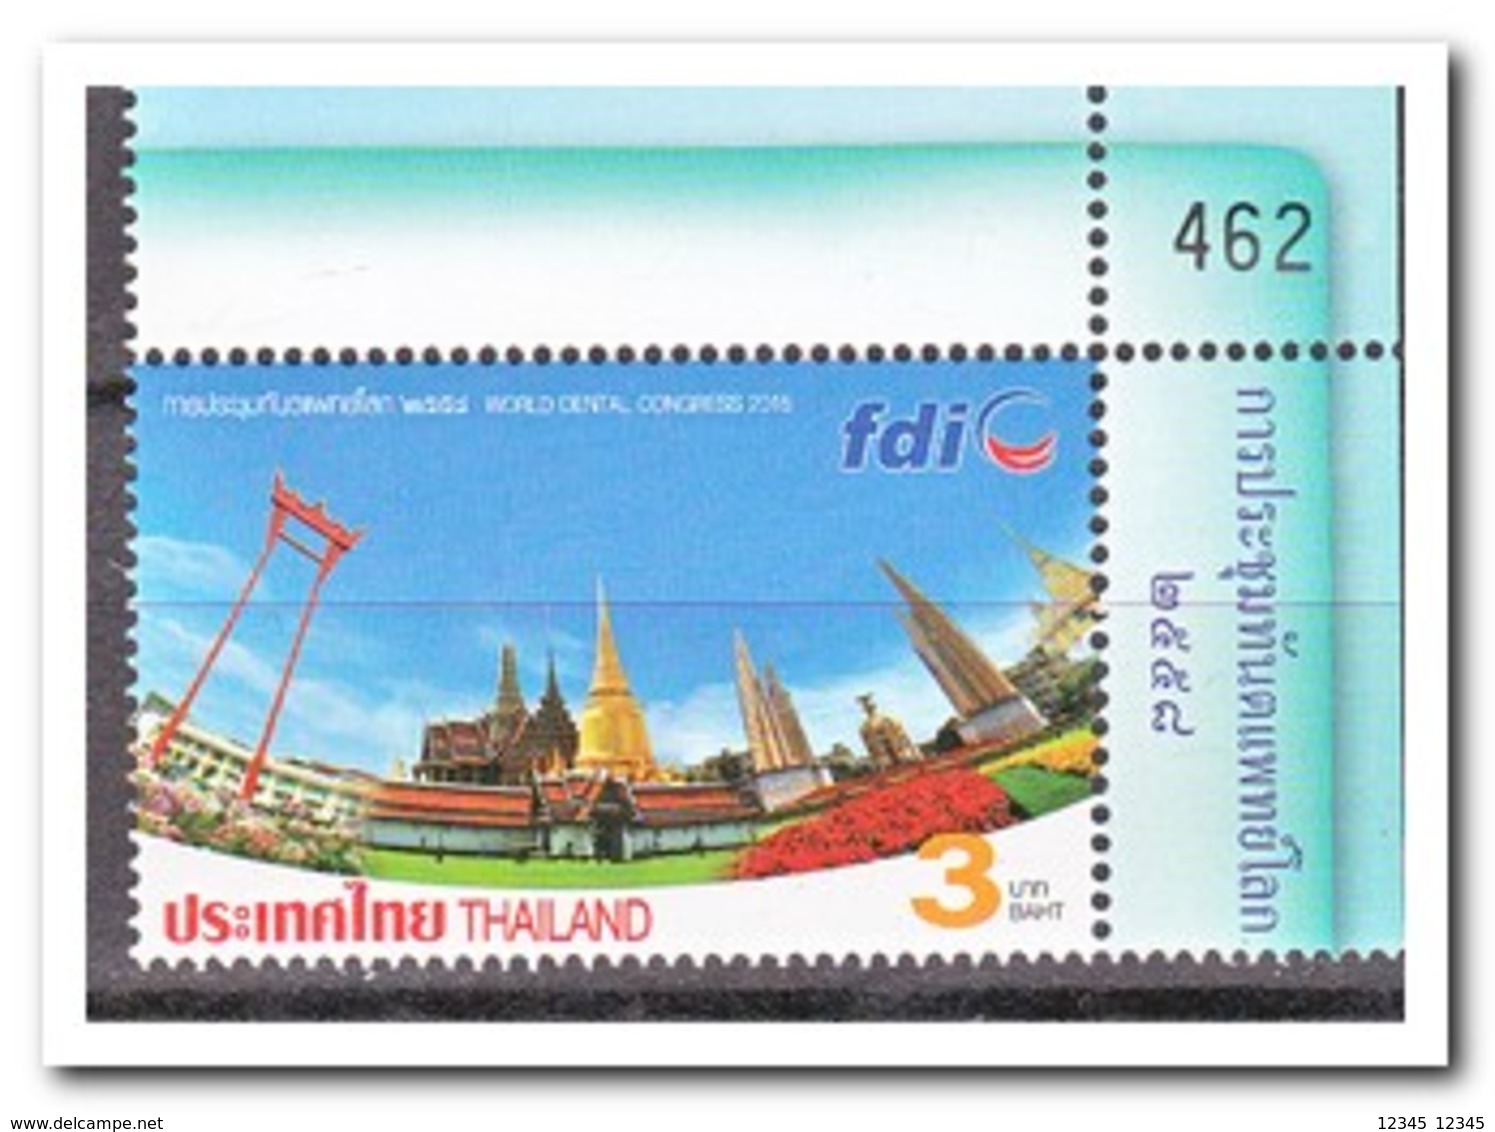 Thailand 2015, Postfris MNH, World Congress Of Dentists, Bangkok 14 1/2 X 14 - Thailand